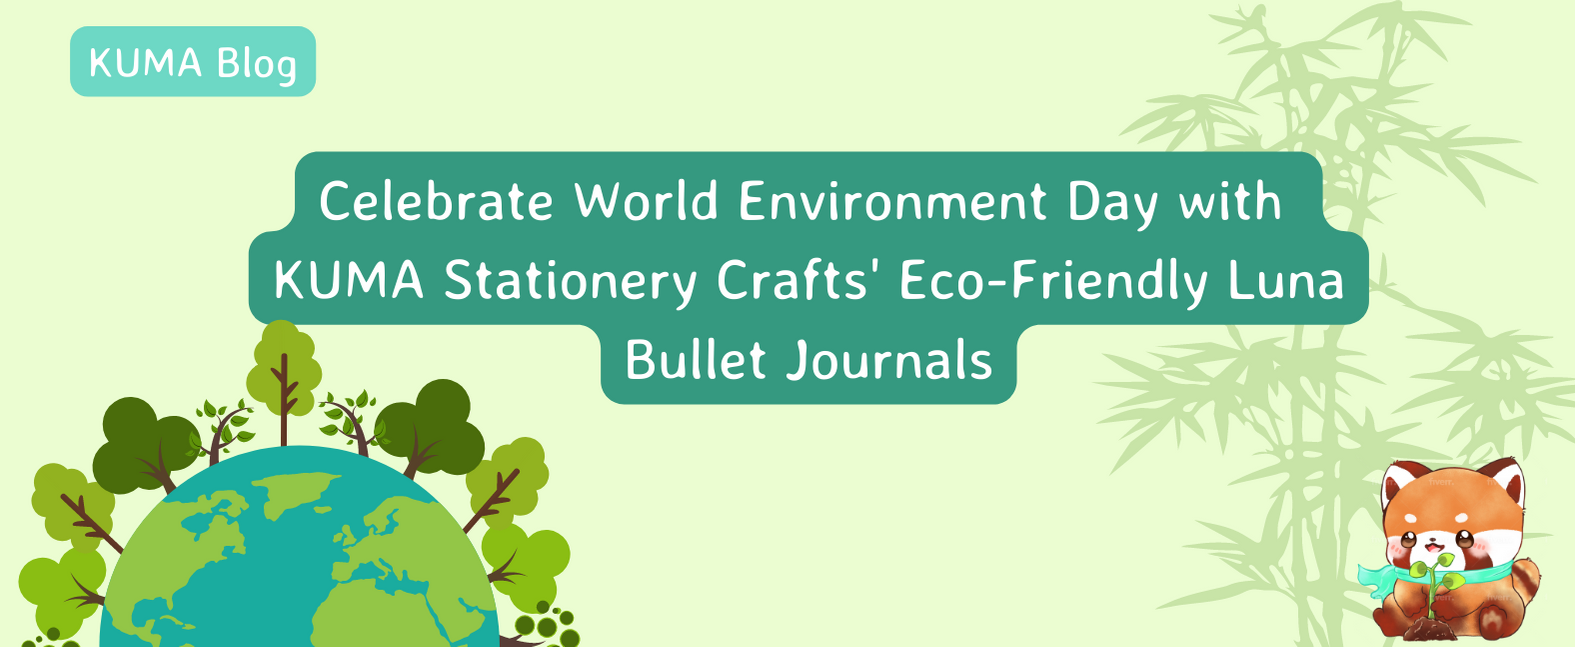 KUMA stationery crafts bullet journals notebook